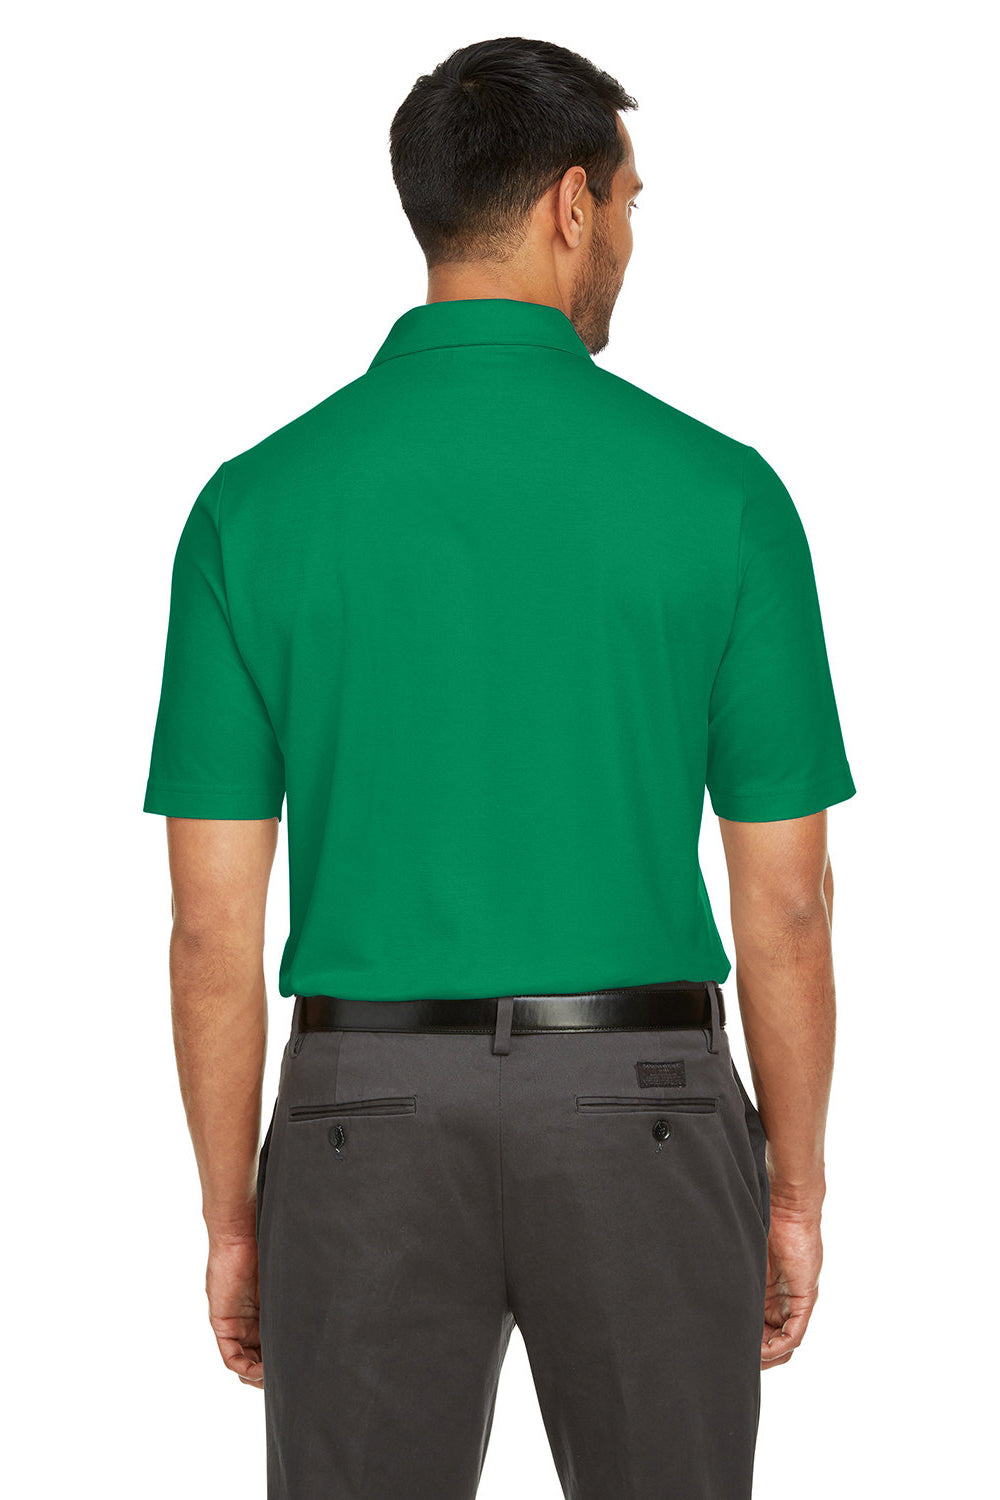 Core 365 CE112 Mens Fusion ChromaSoft Performance Moisture Wicking Short Sleeve Polo Shirt Kelly Green Back